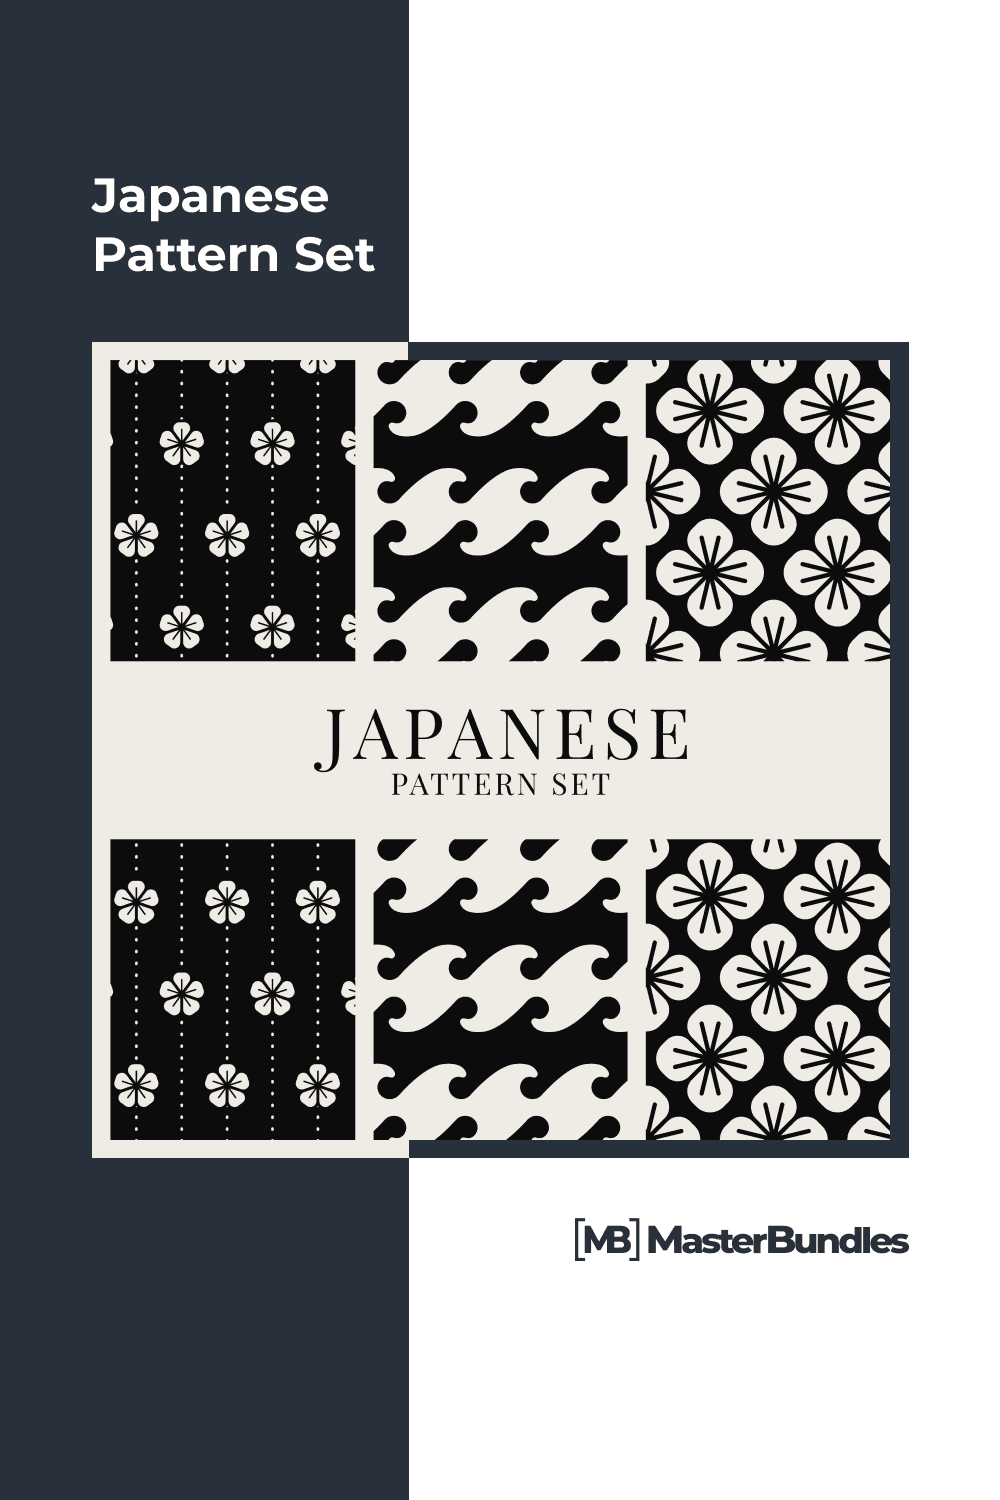 Black and white Japanese pattern set.